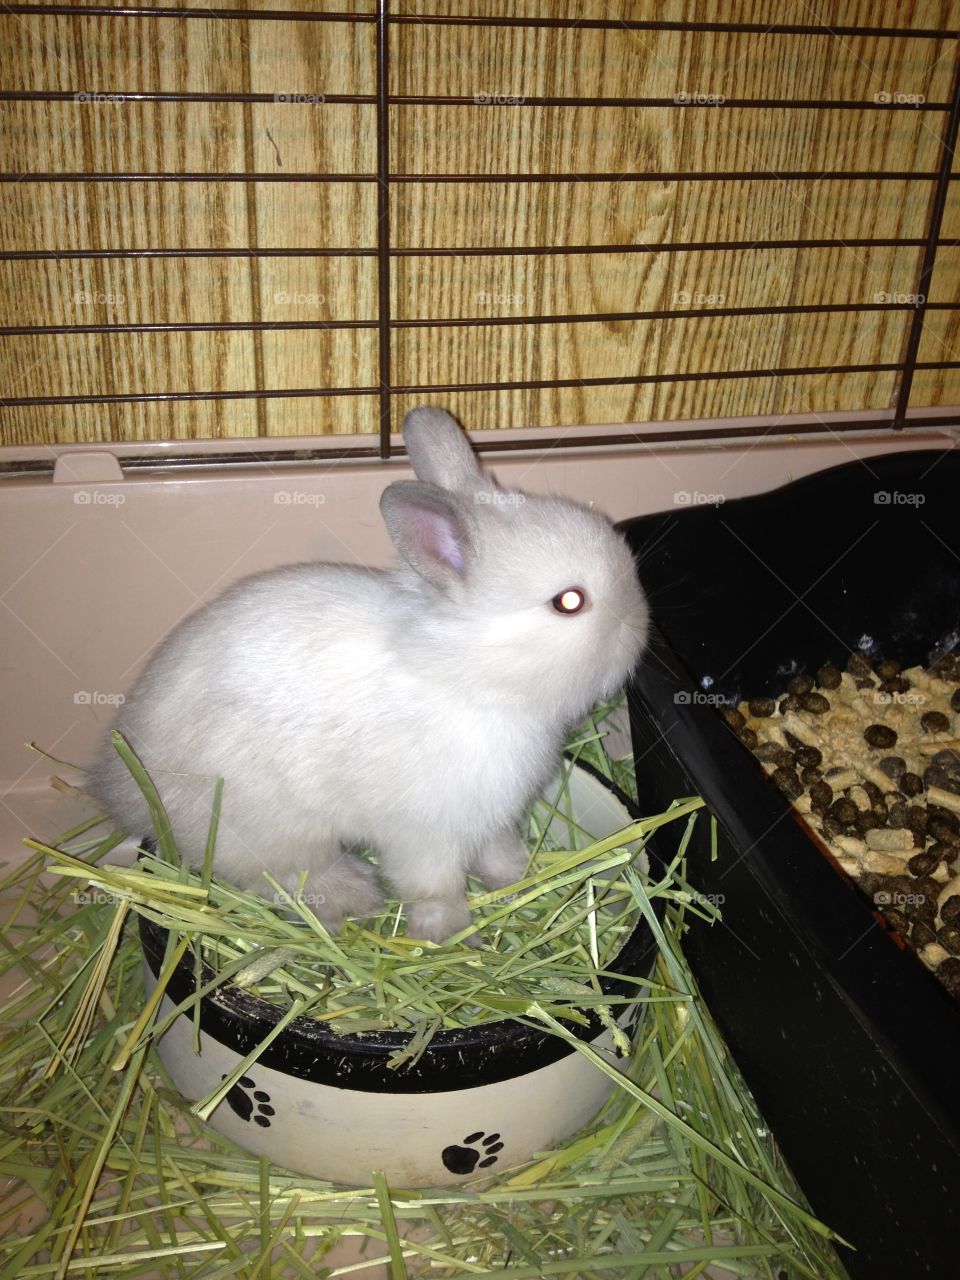 My precious Rabbit when she was a bunny!